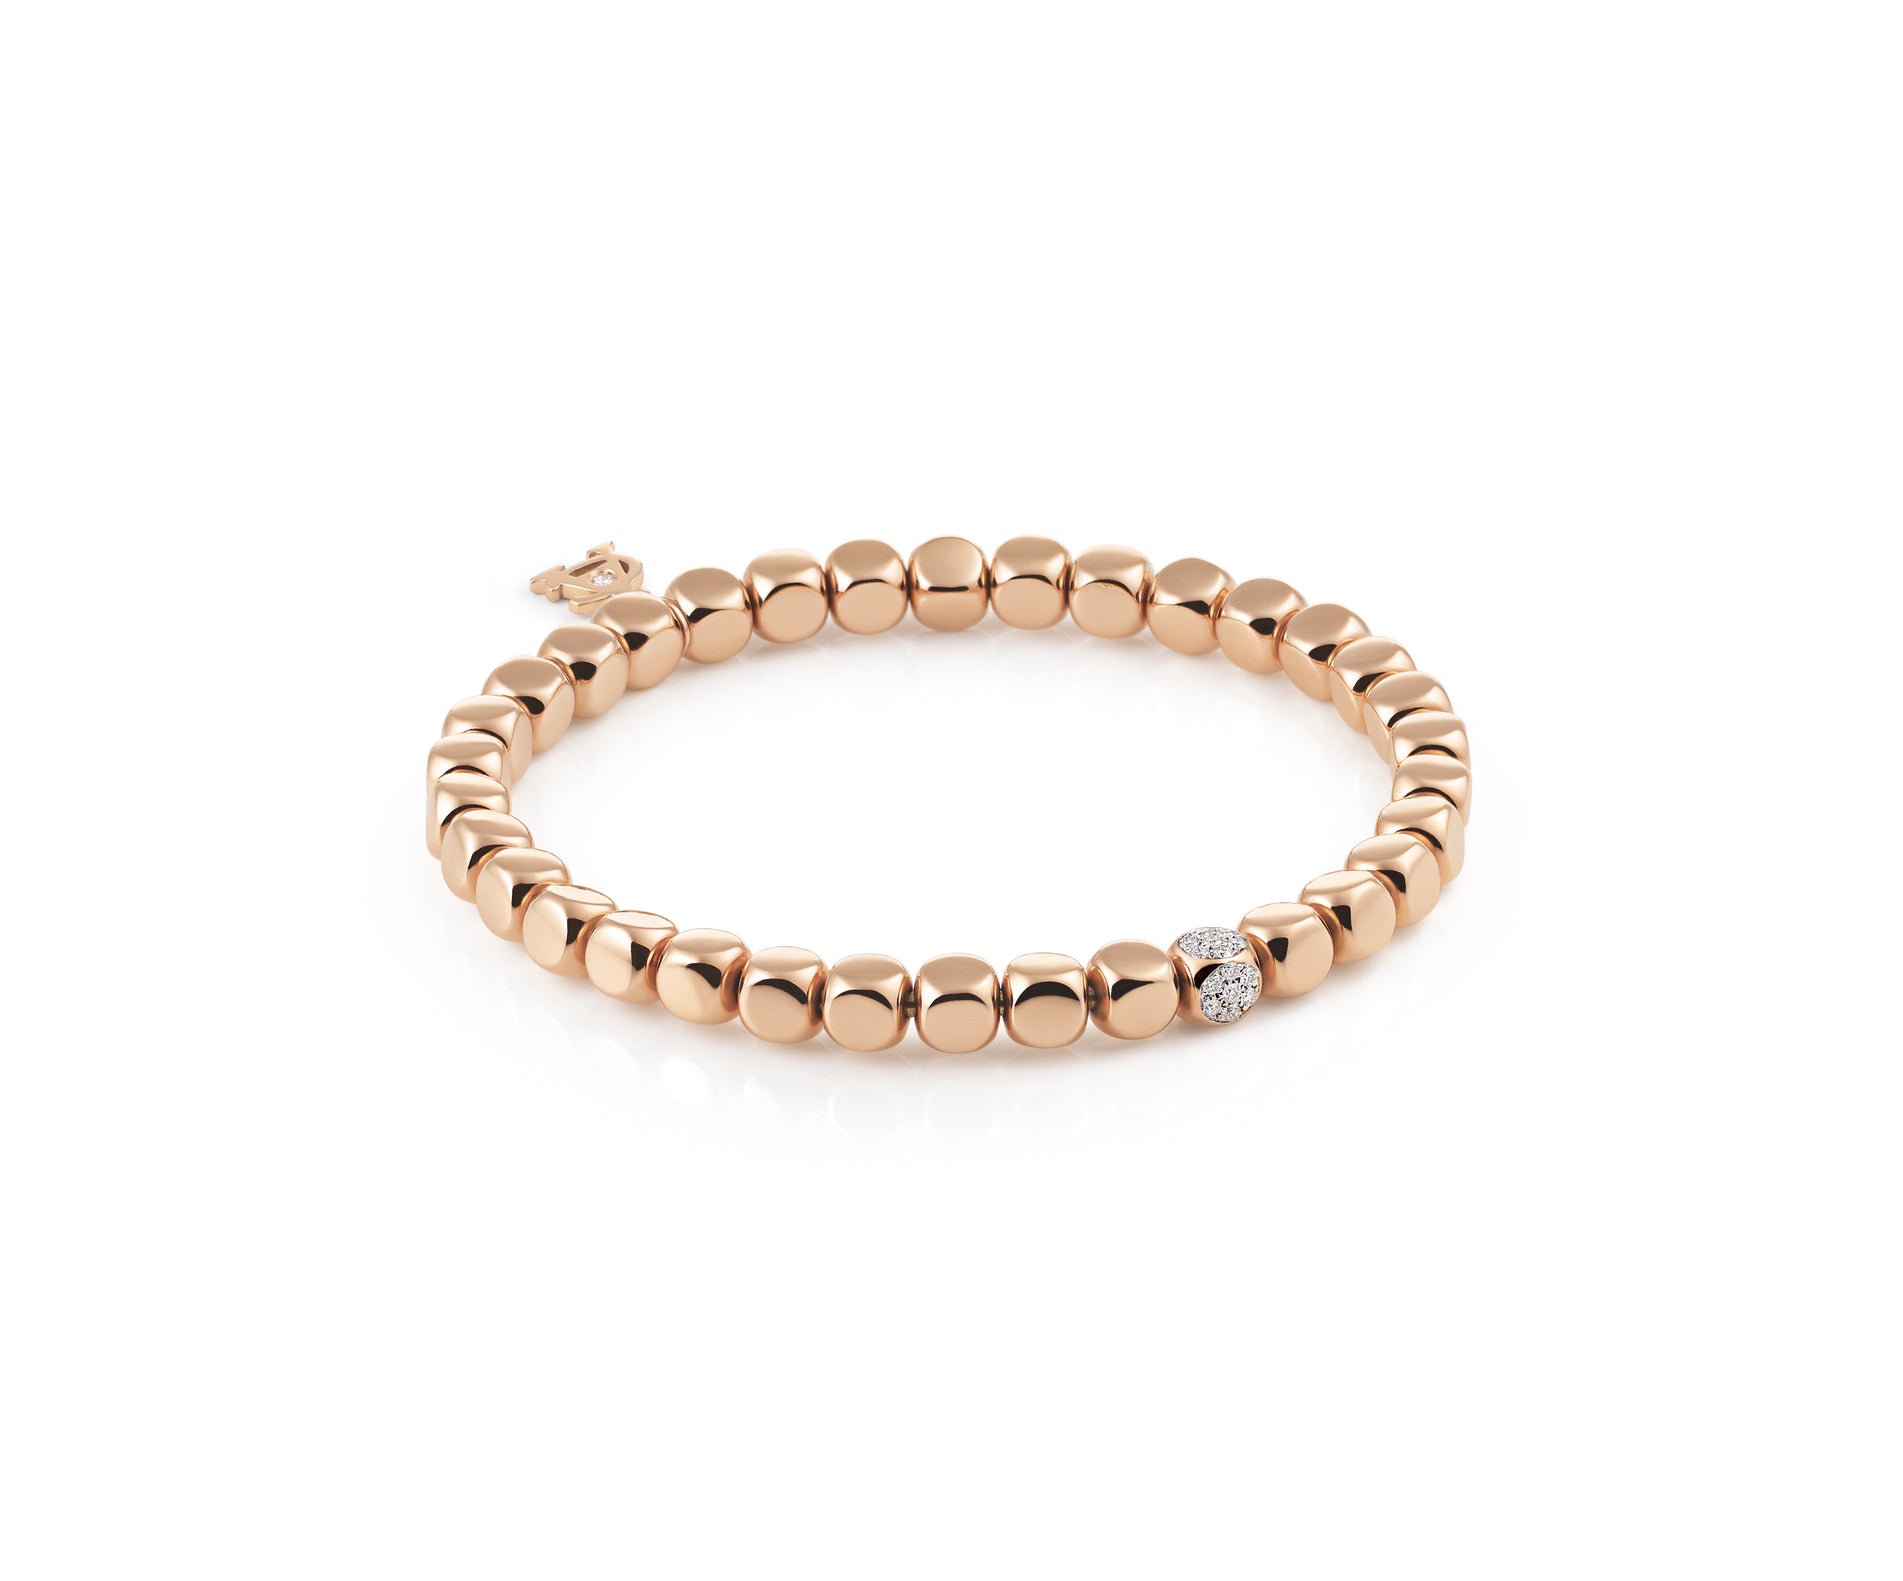 Al Coro Square Stretchy Bracelet in 18k Rose Gold with Diamond Detail - Orsini Jewellers